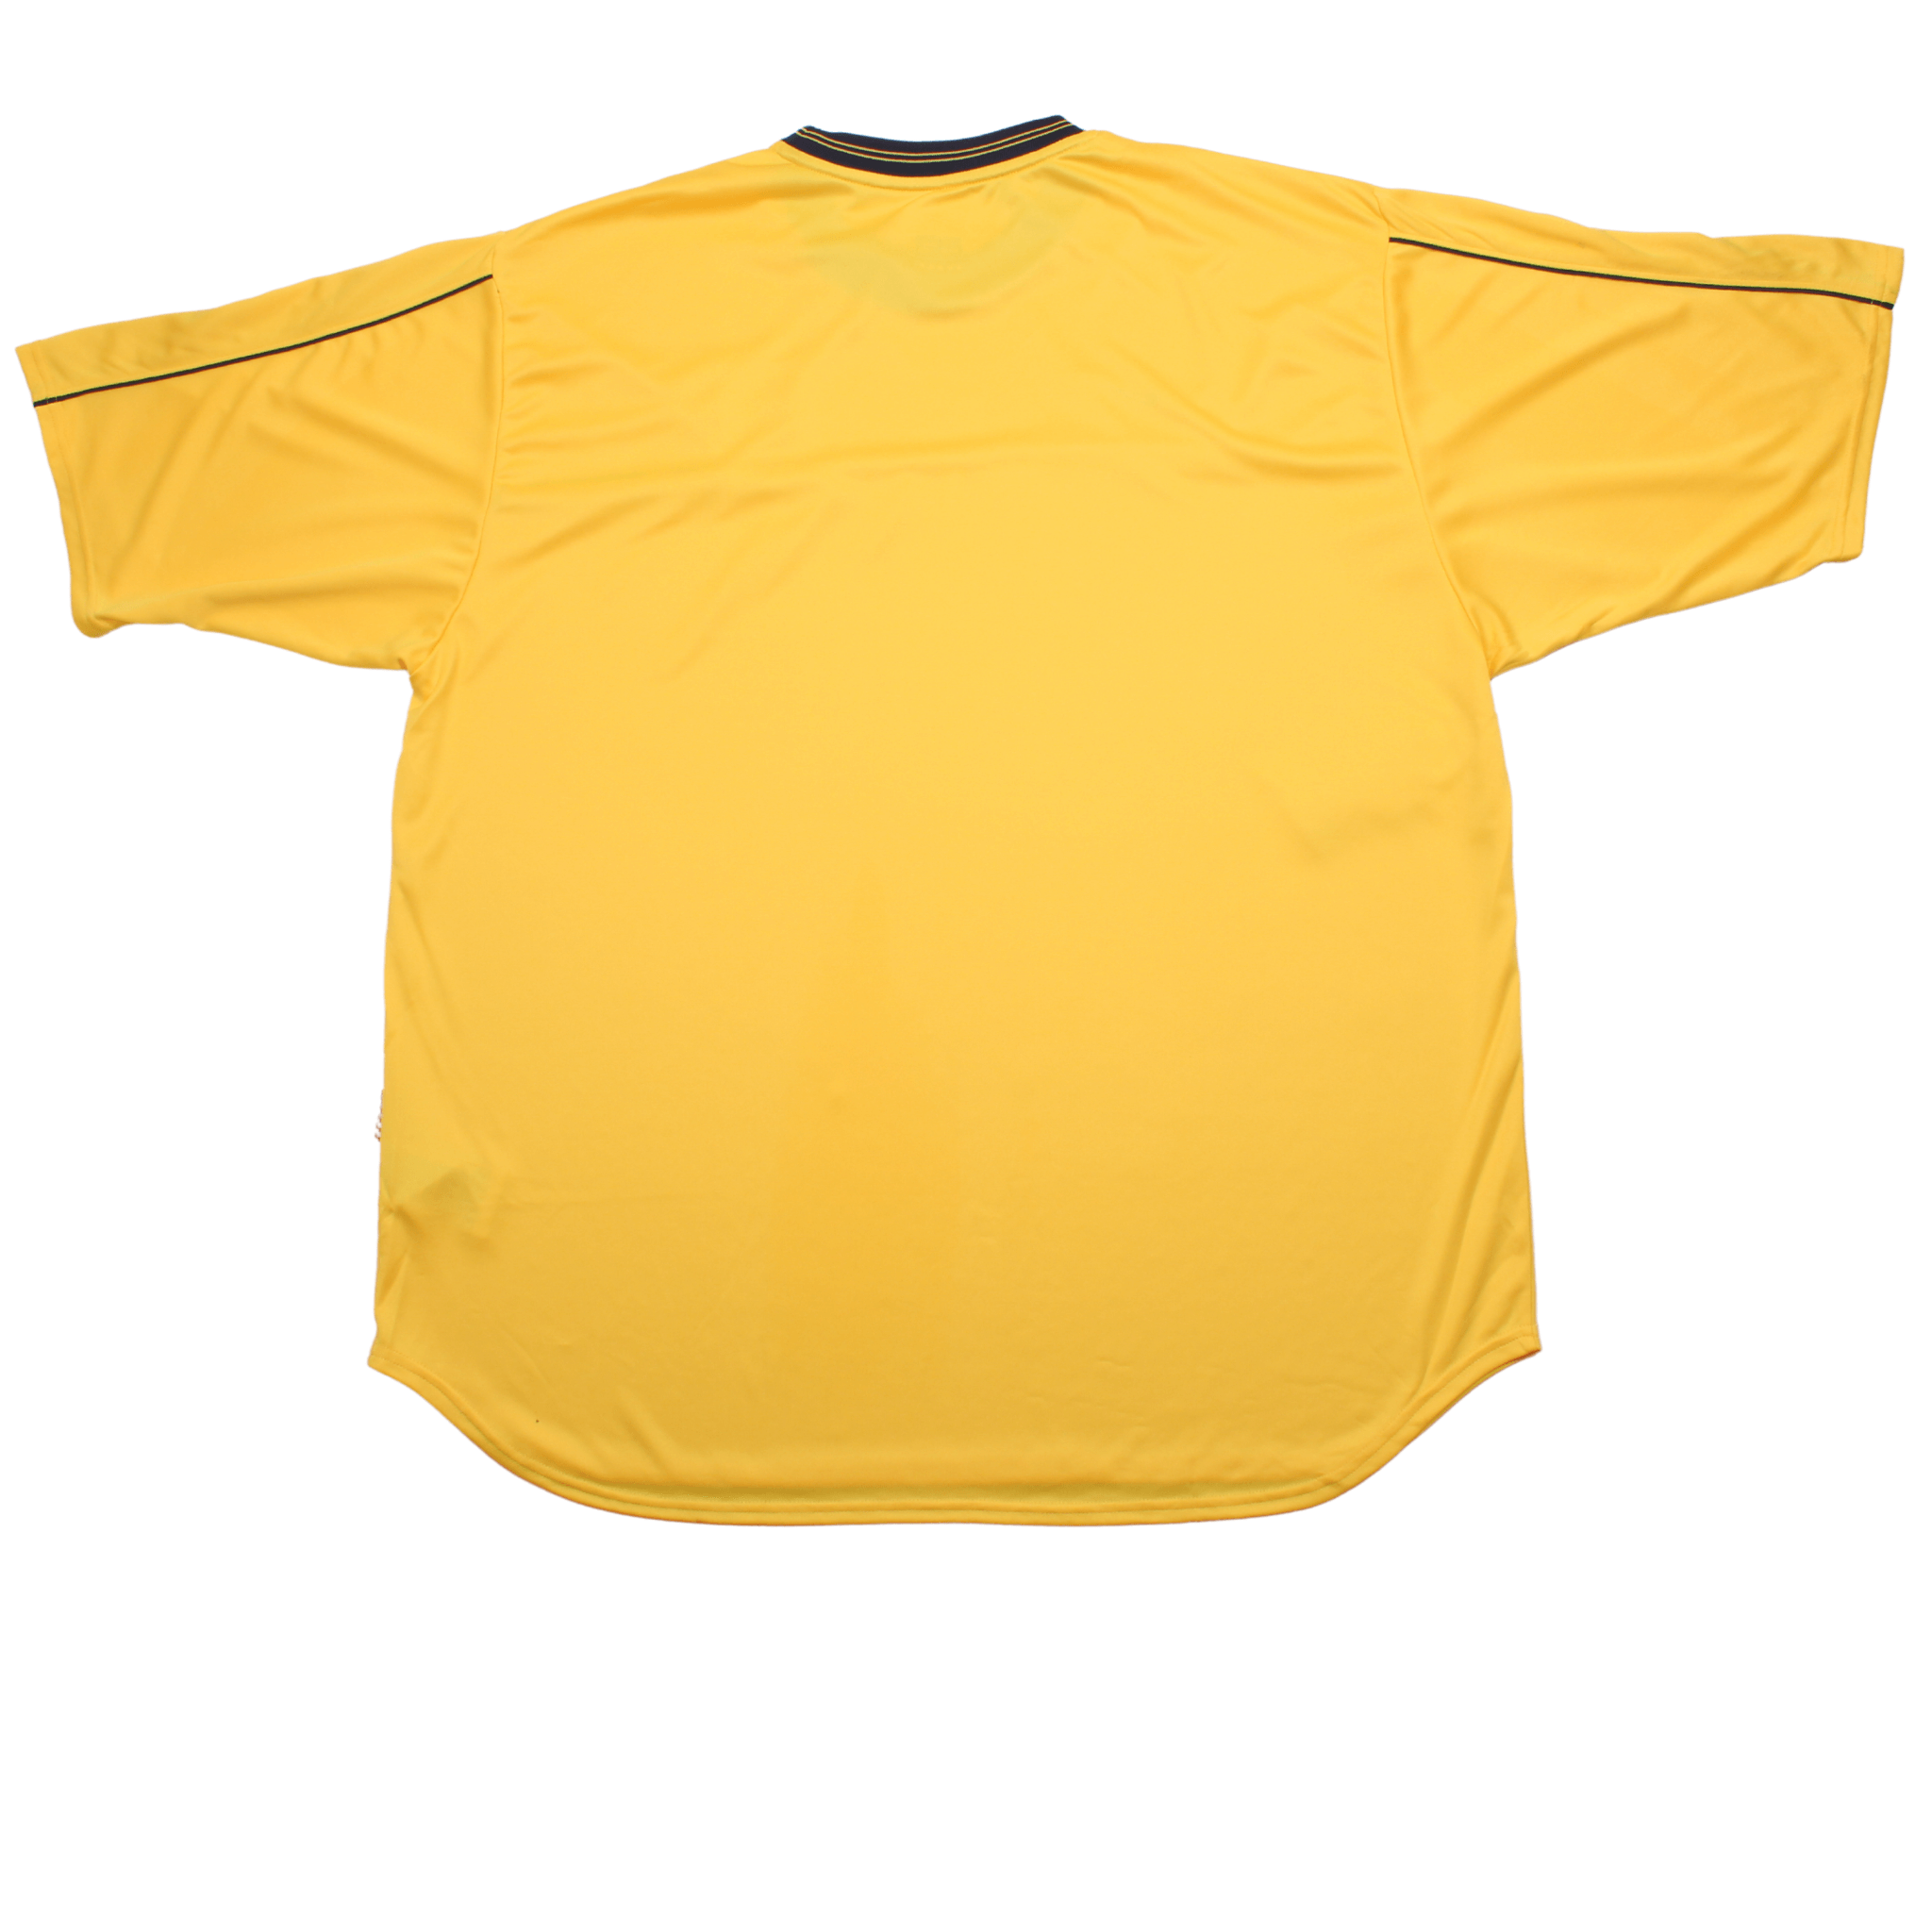 Vintage Nike Arsenal FC T Shirt (XXL) BNWOT